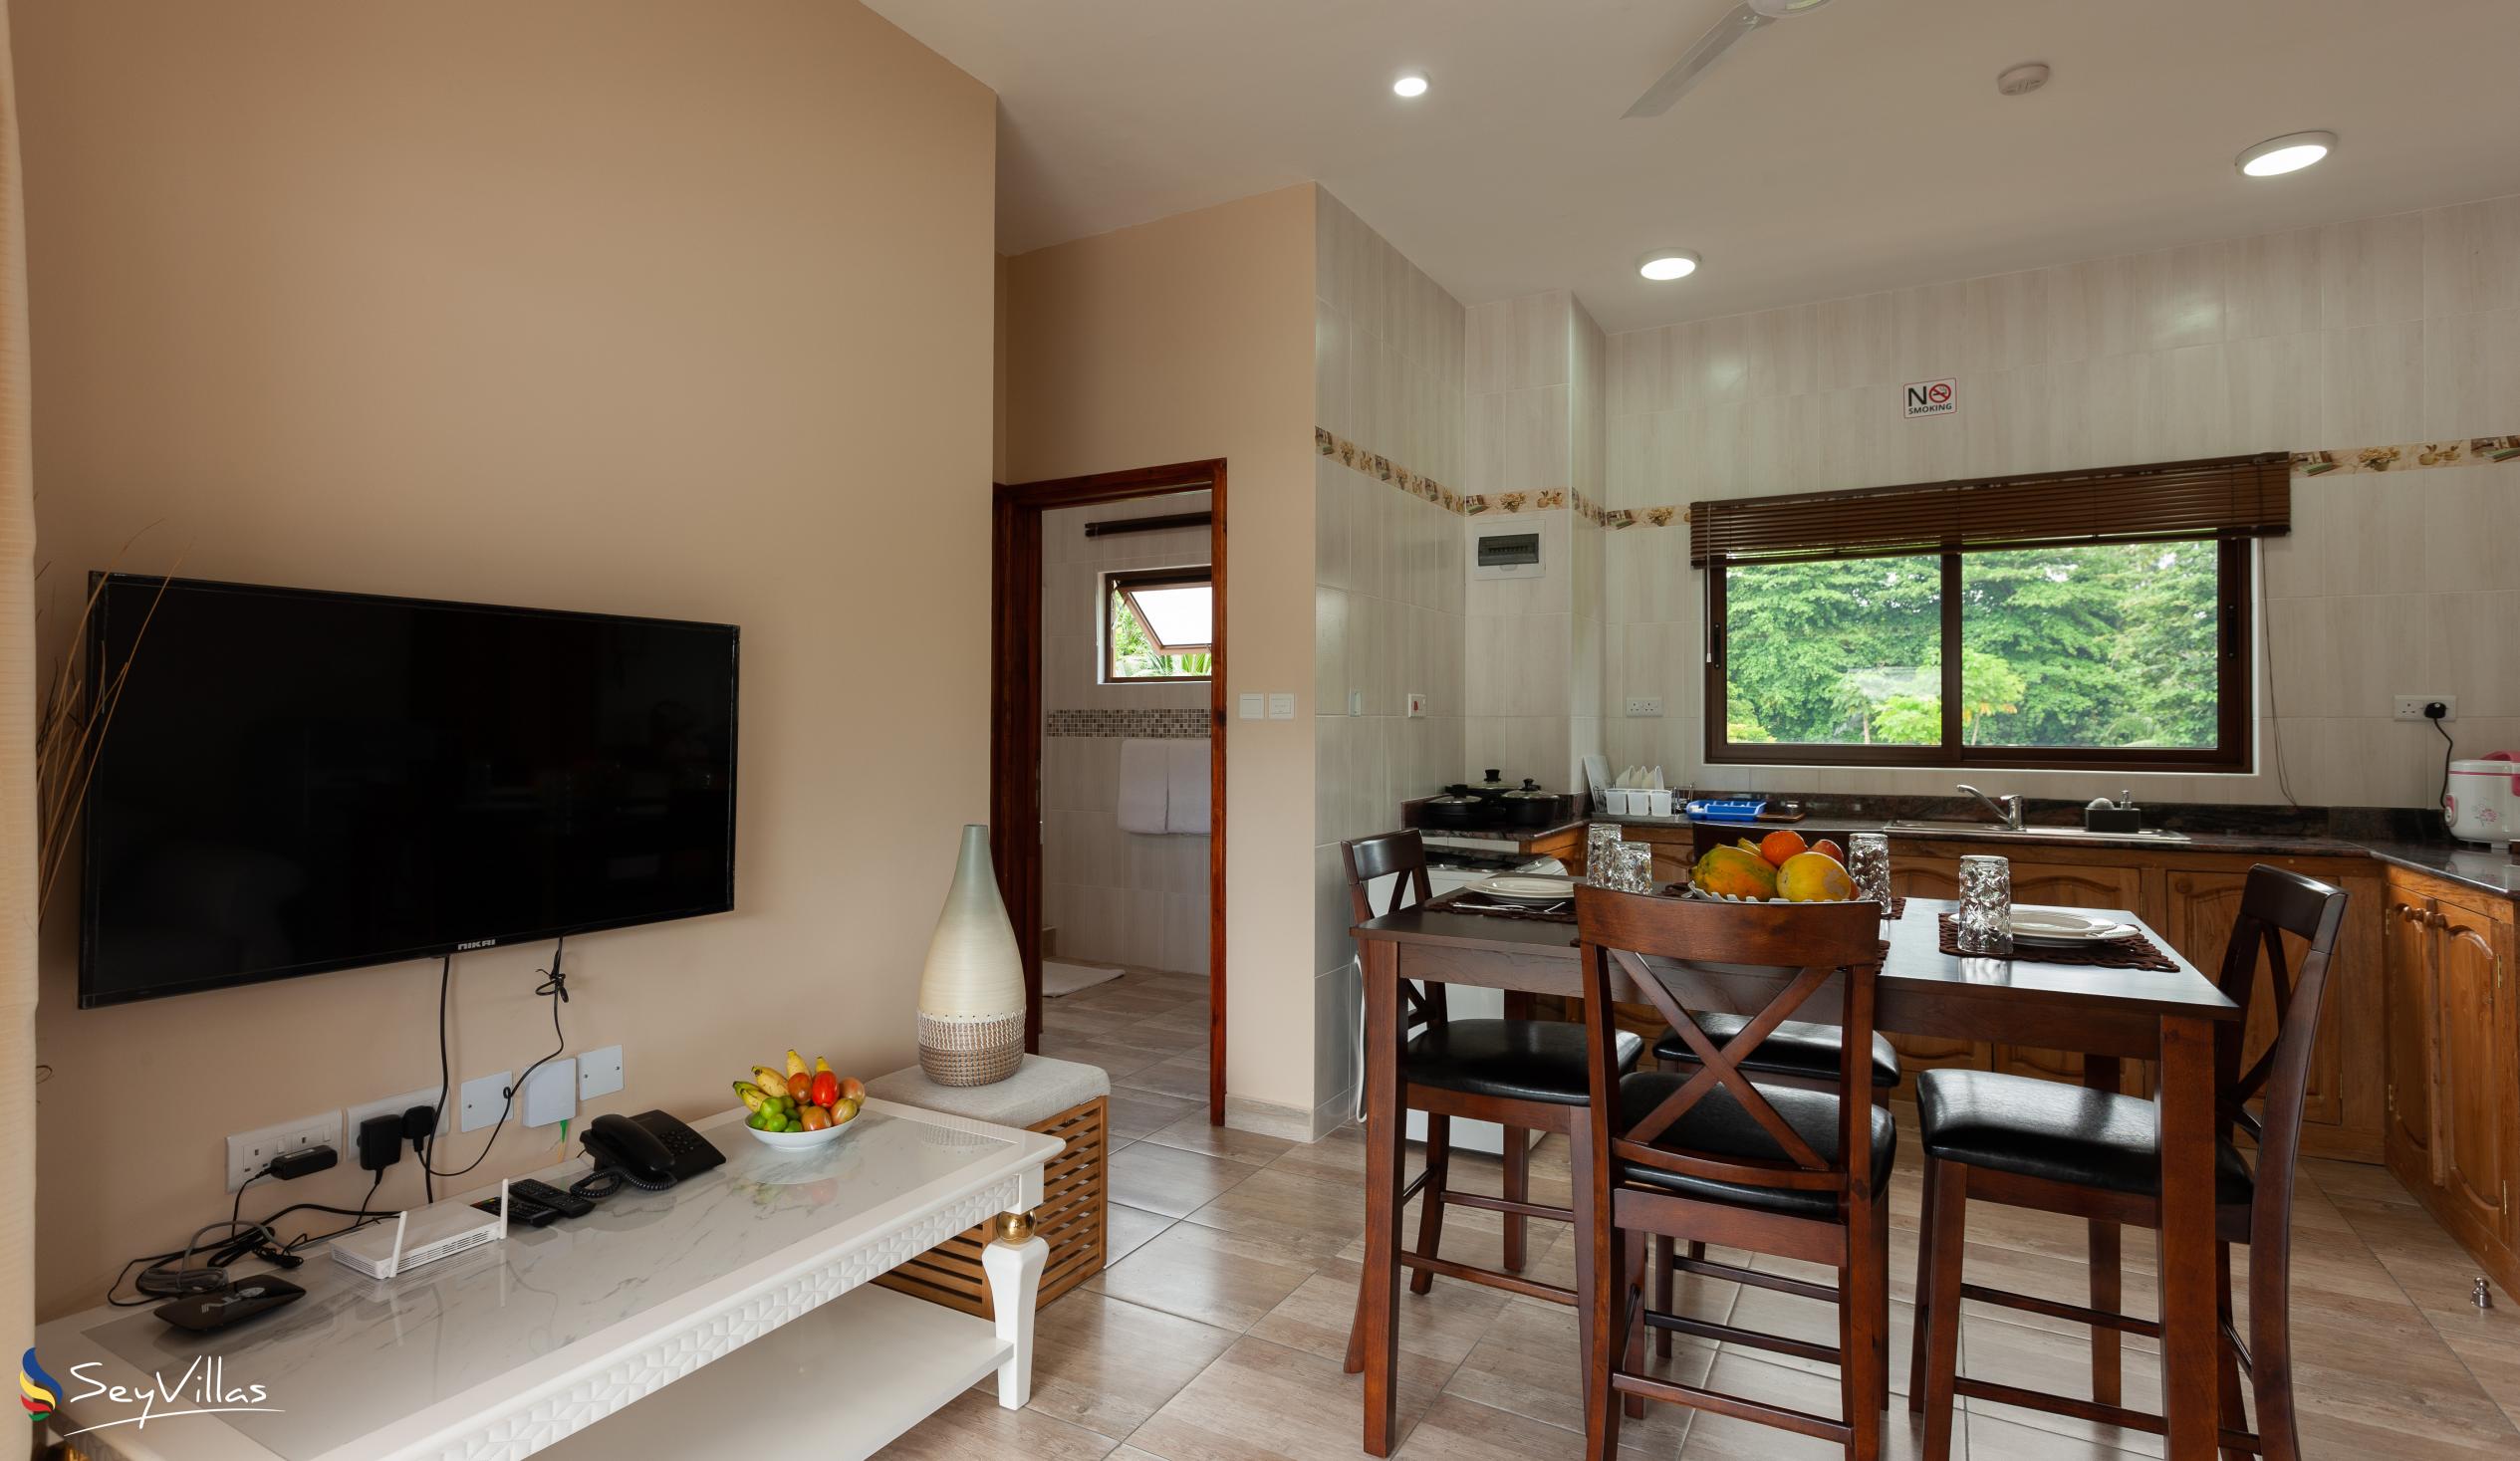 Photo 29: Stone Self Catering Apartments - 1-Bedroom Apartment - Praslin (Seychelles)